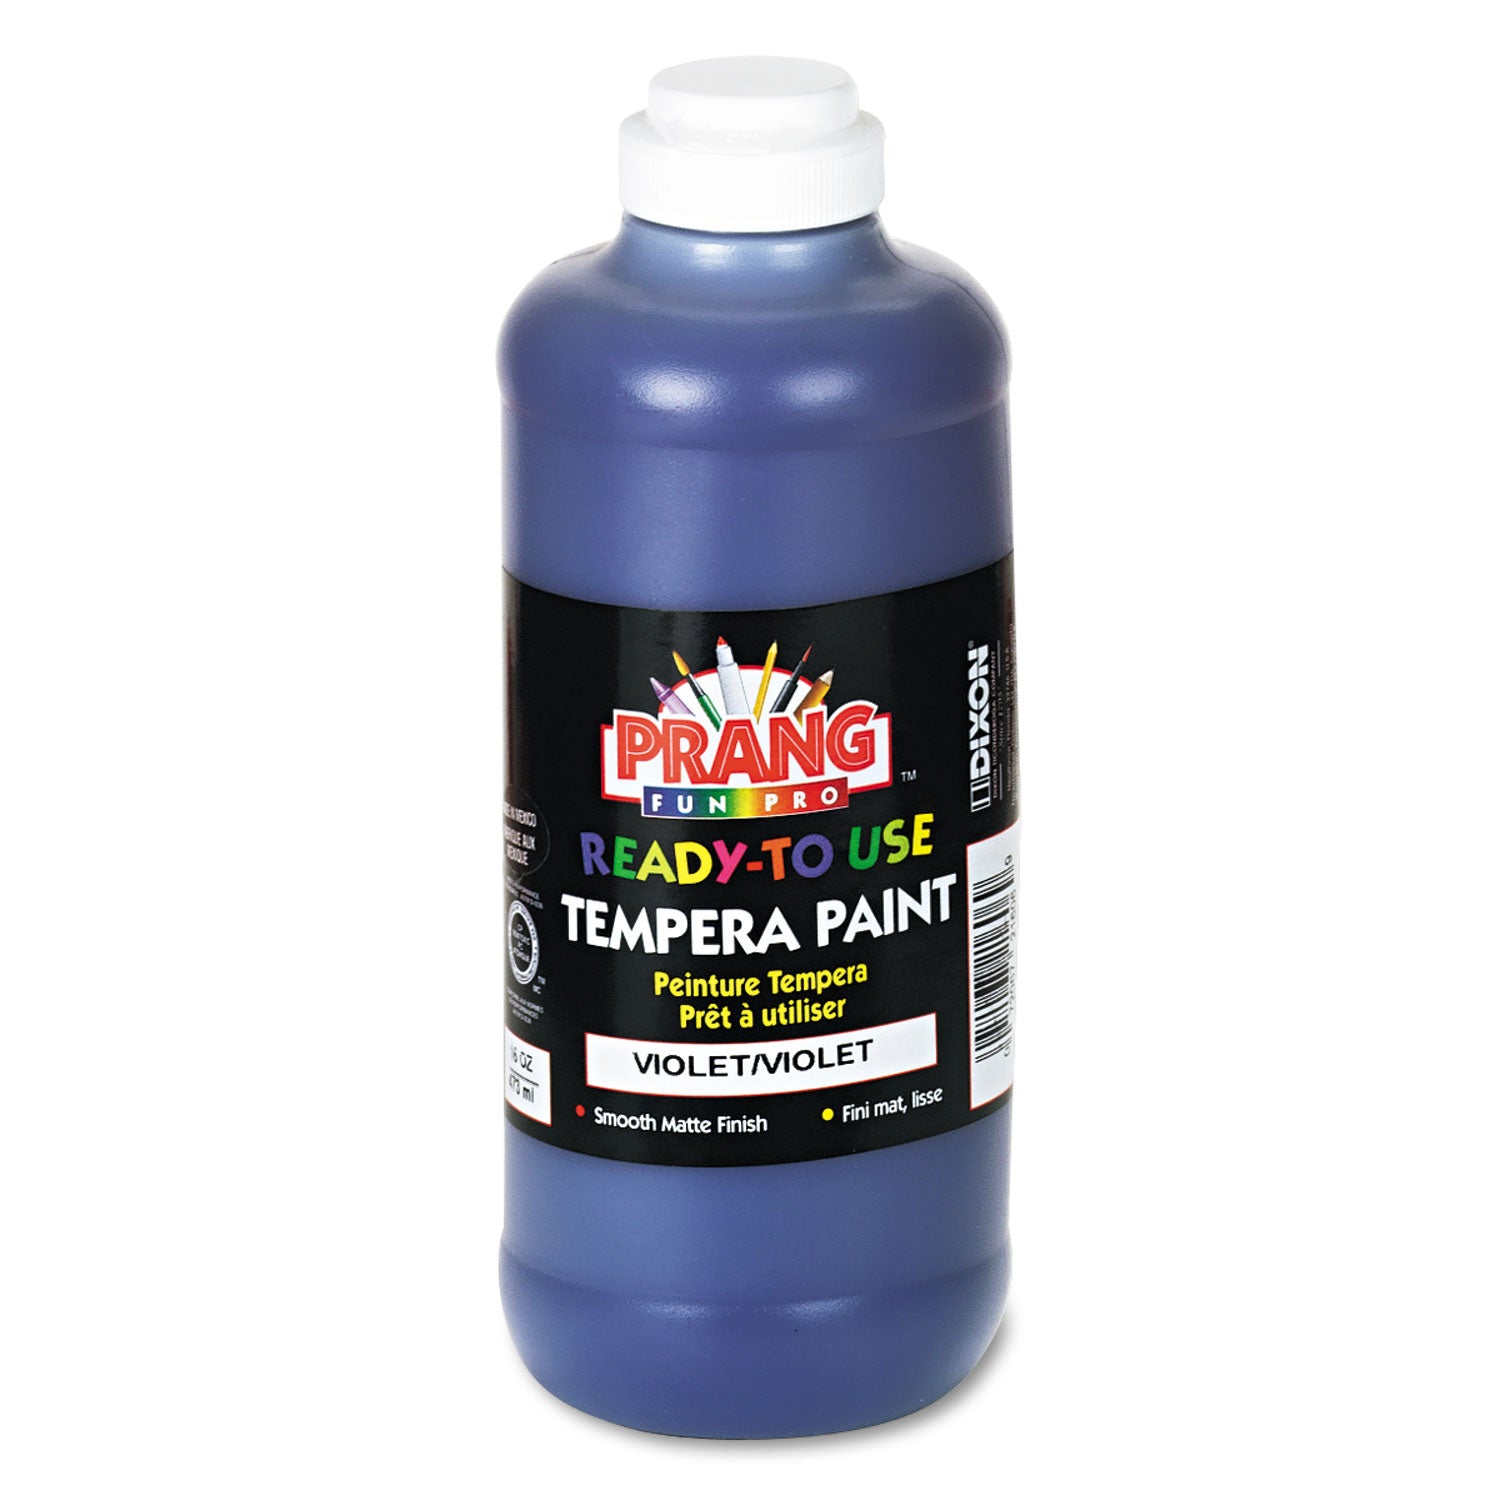 Ready-to-Use Tempera Paint, Violet, 16 oz Dispenser-Cap Bottle - 